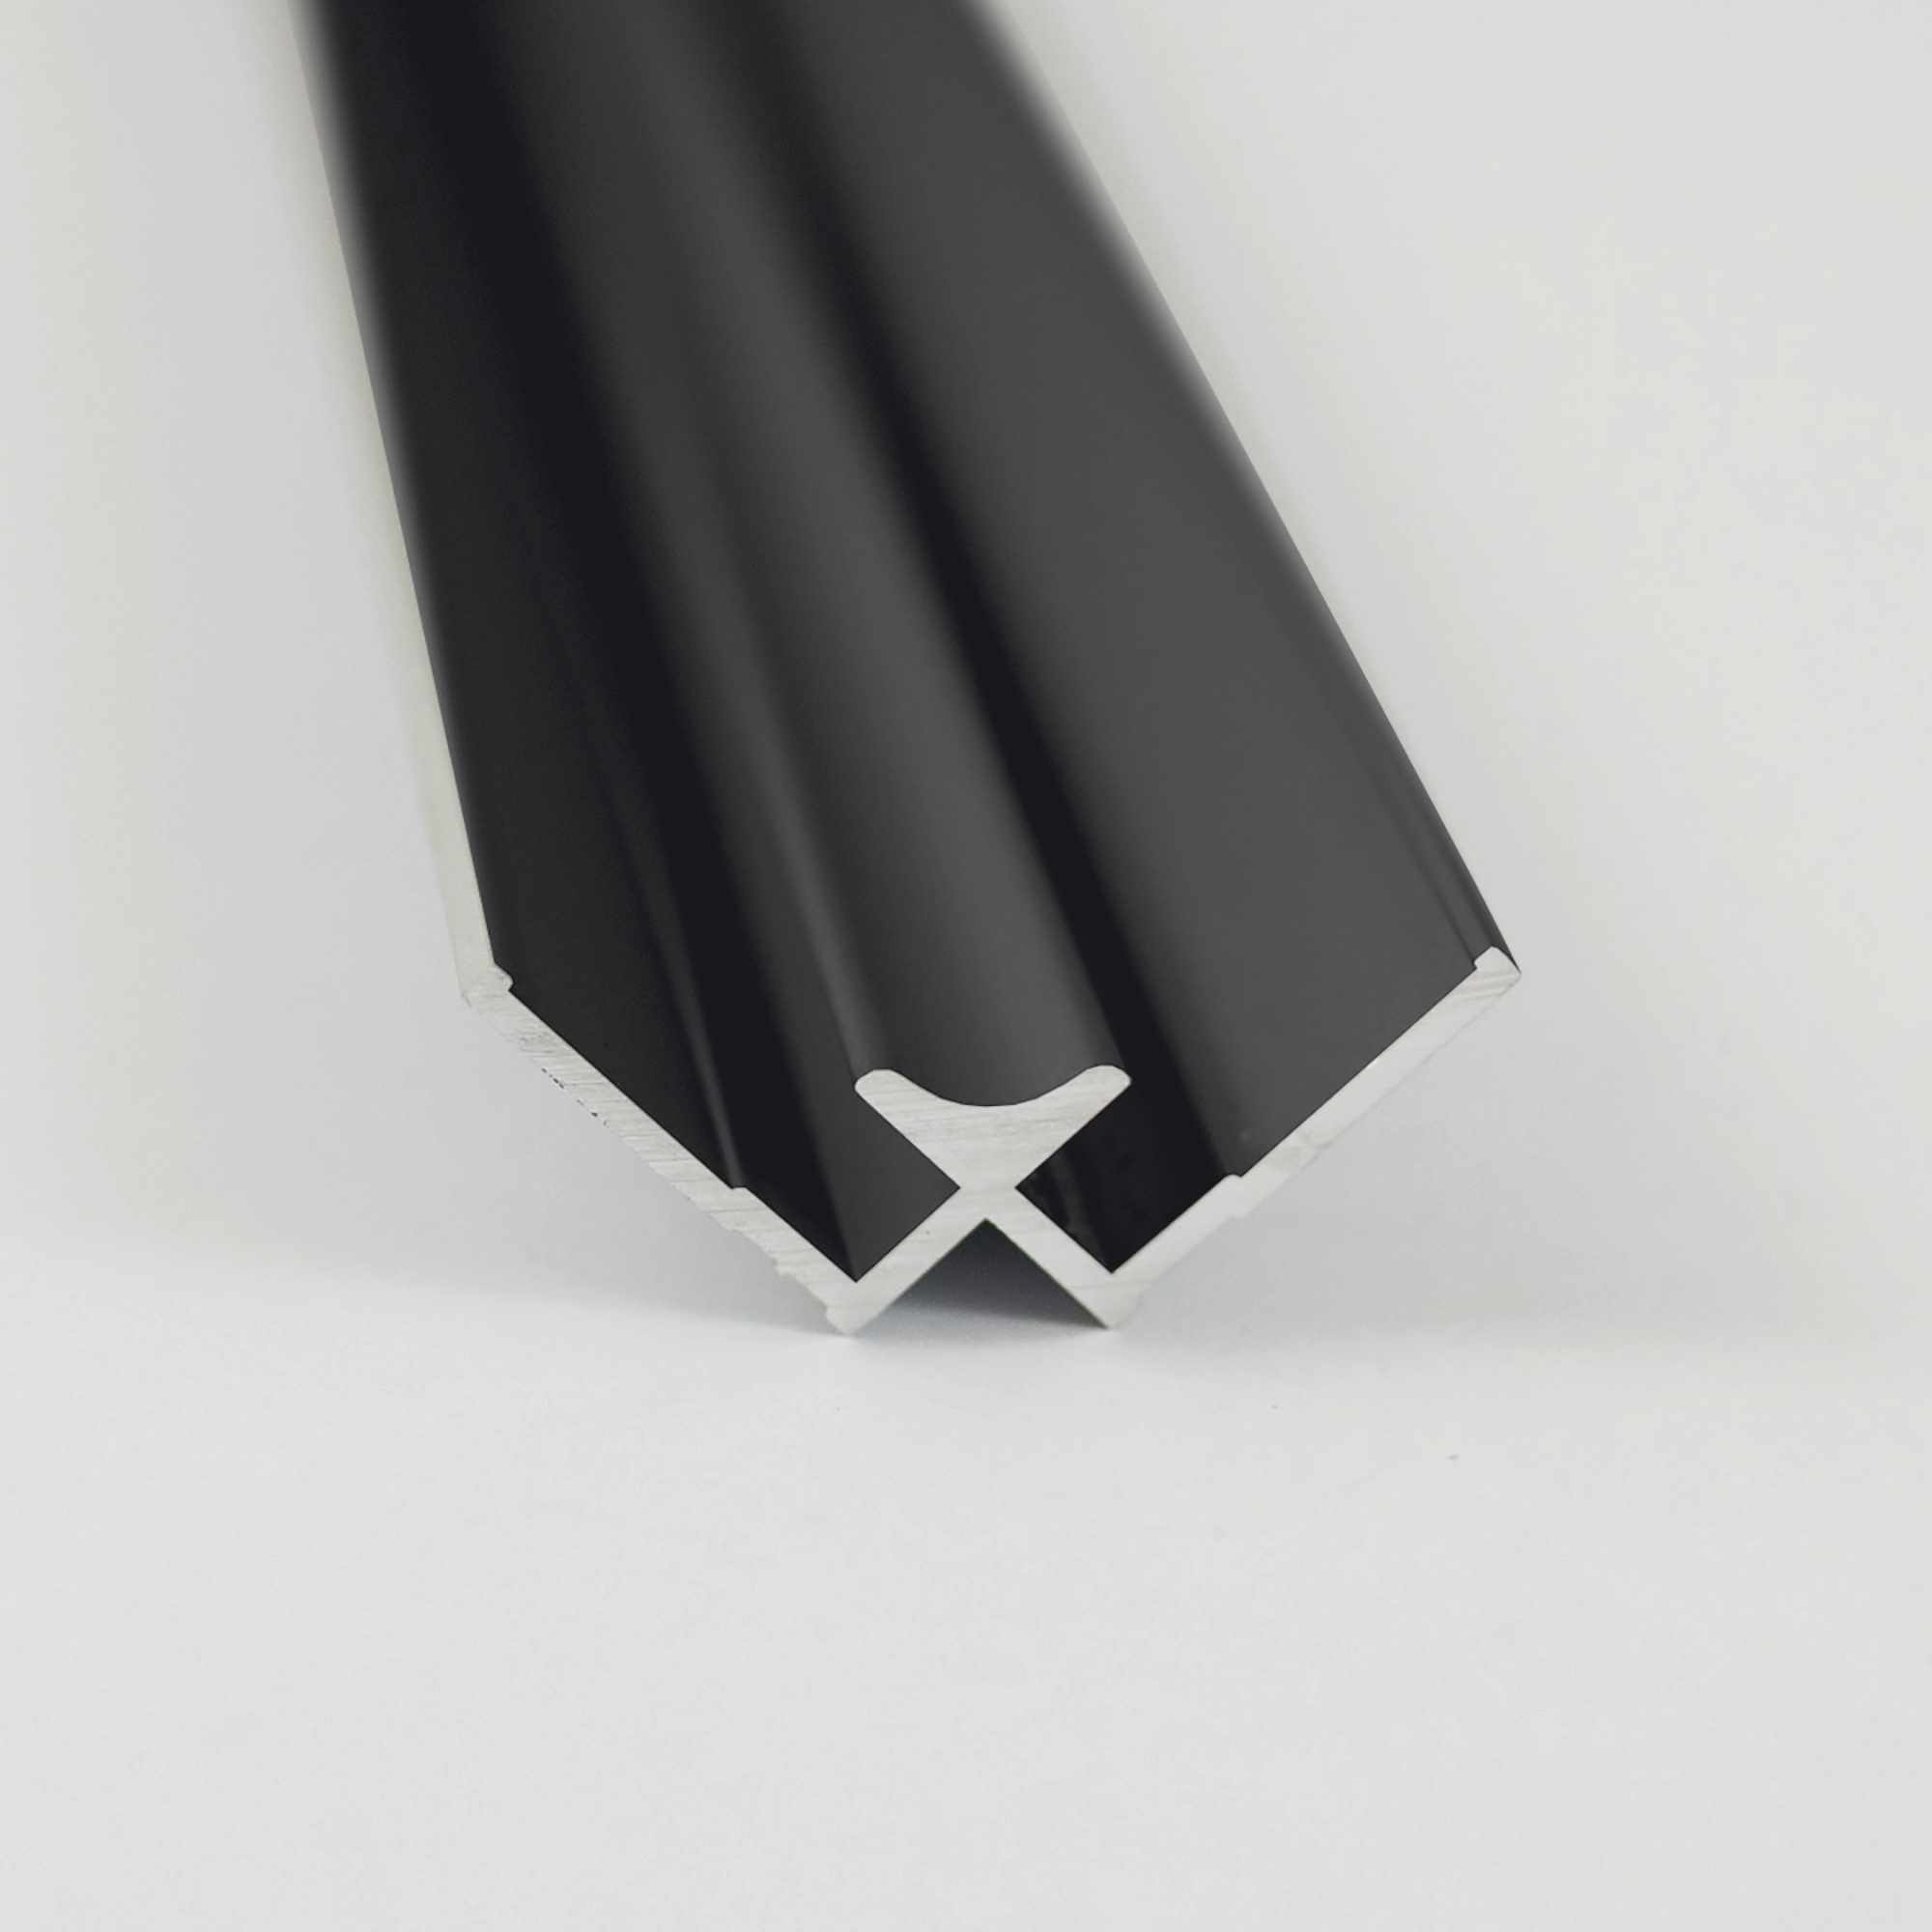 Verbindungsprofil für Rückwandplatten, Ecke innen, schwarz matt, 2100 mm + product picture